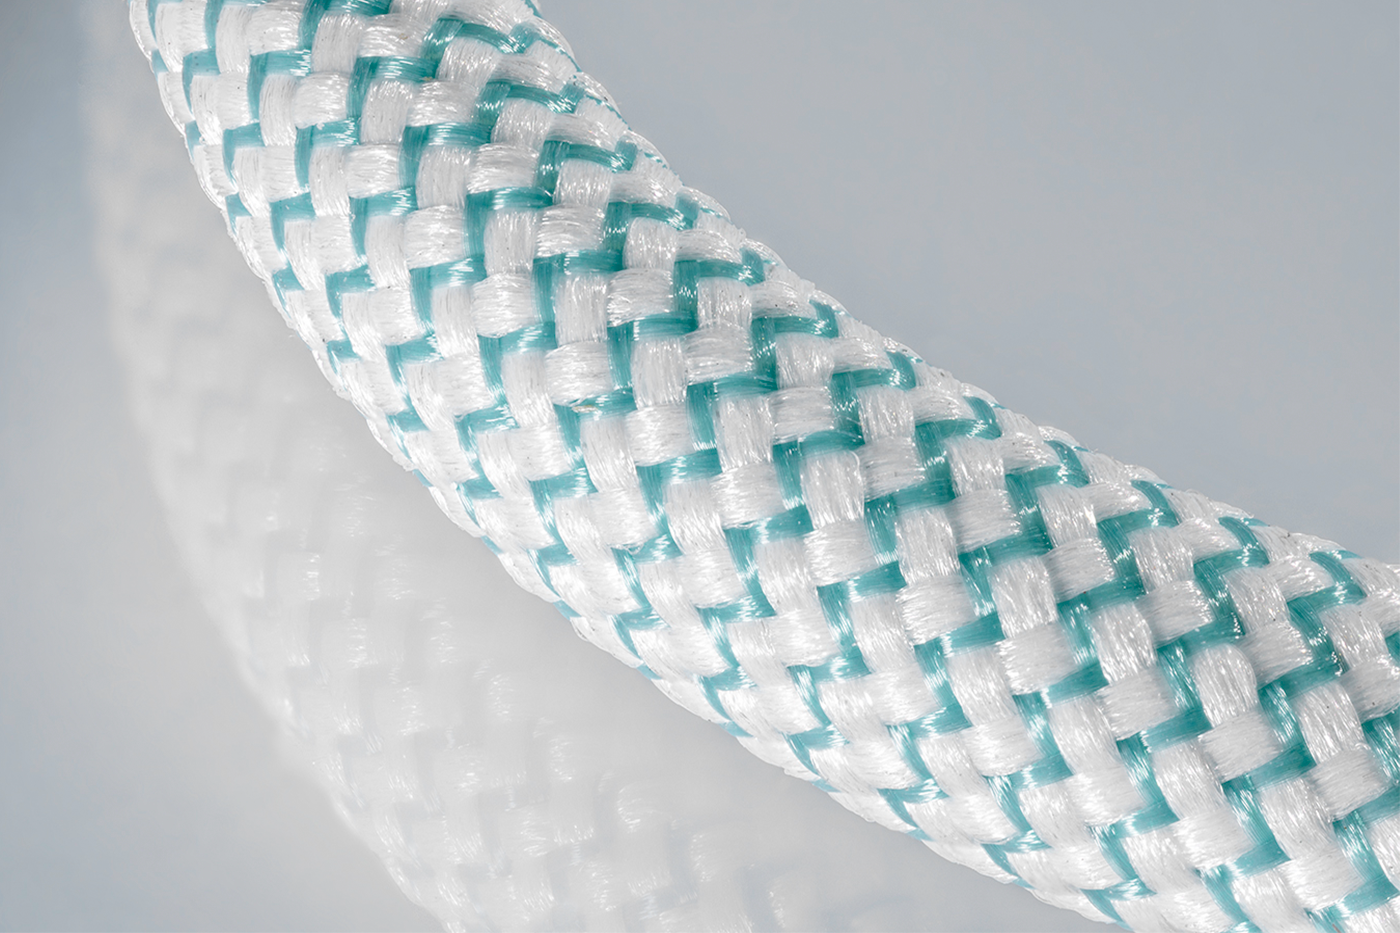 braided biomedical textiles